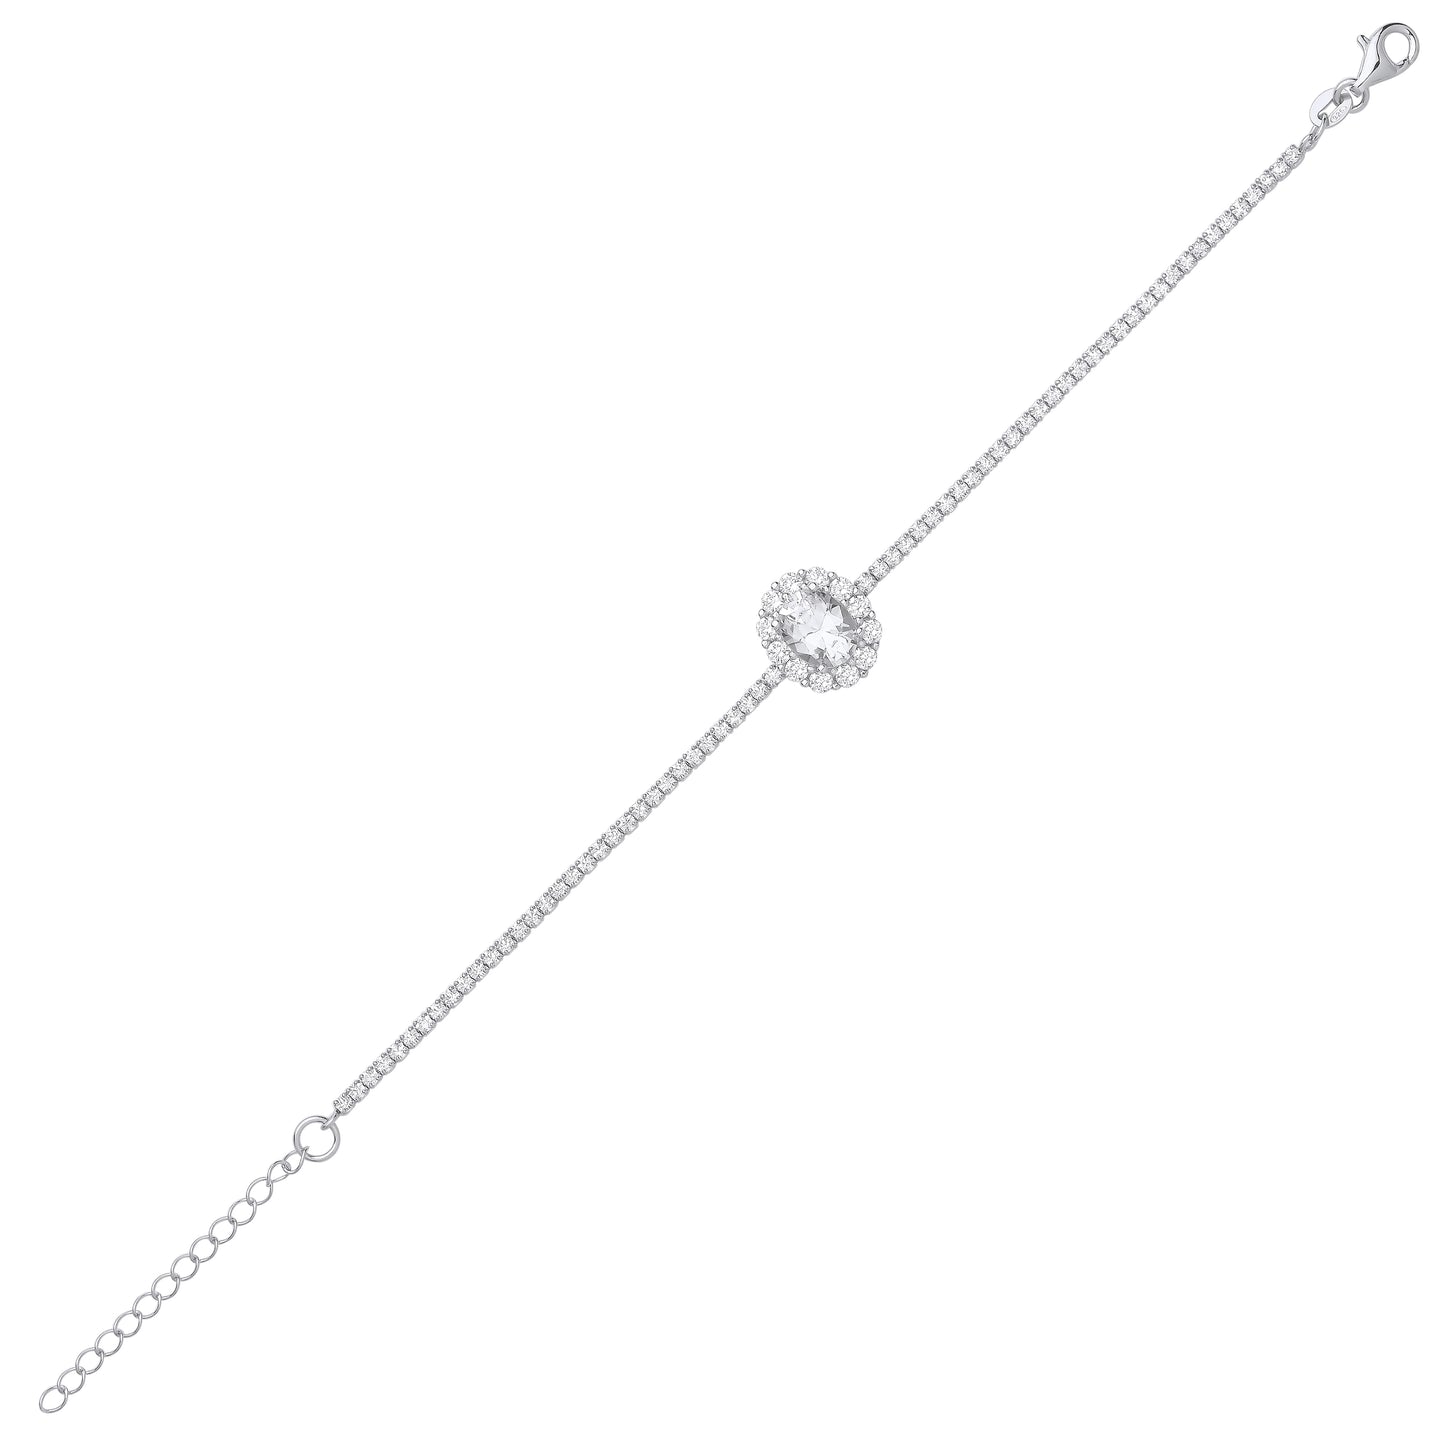 Silver  Royal Oval Halo Cluster Tennis Bracelet - GVB495